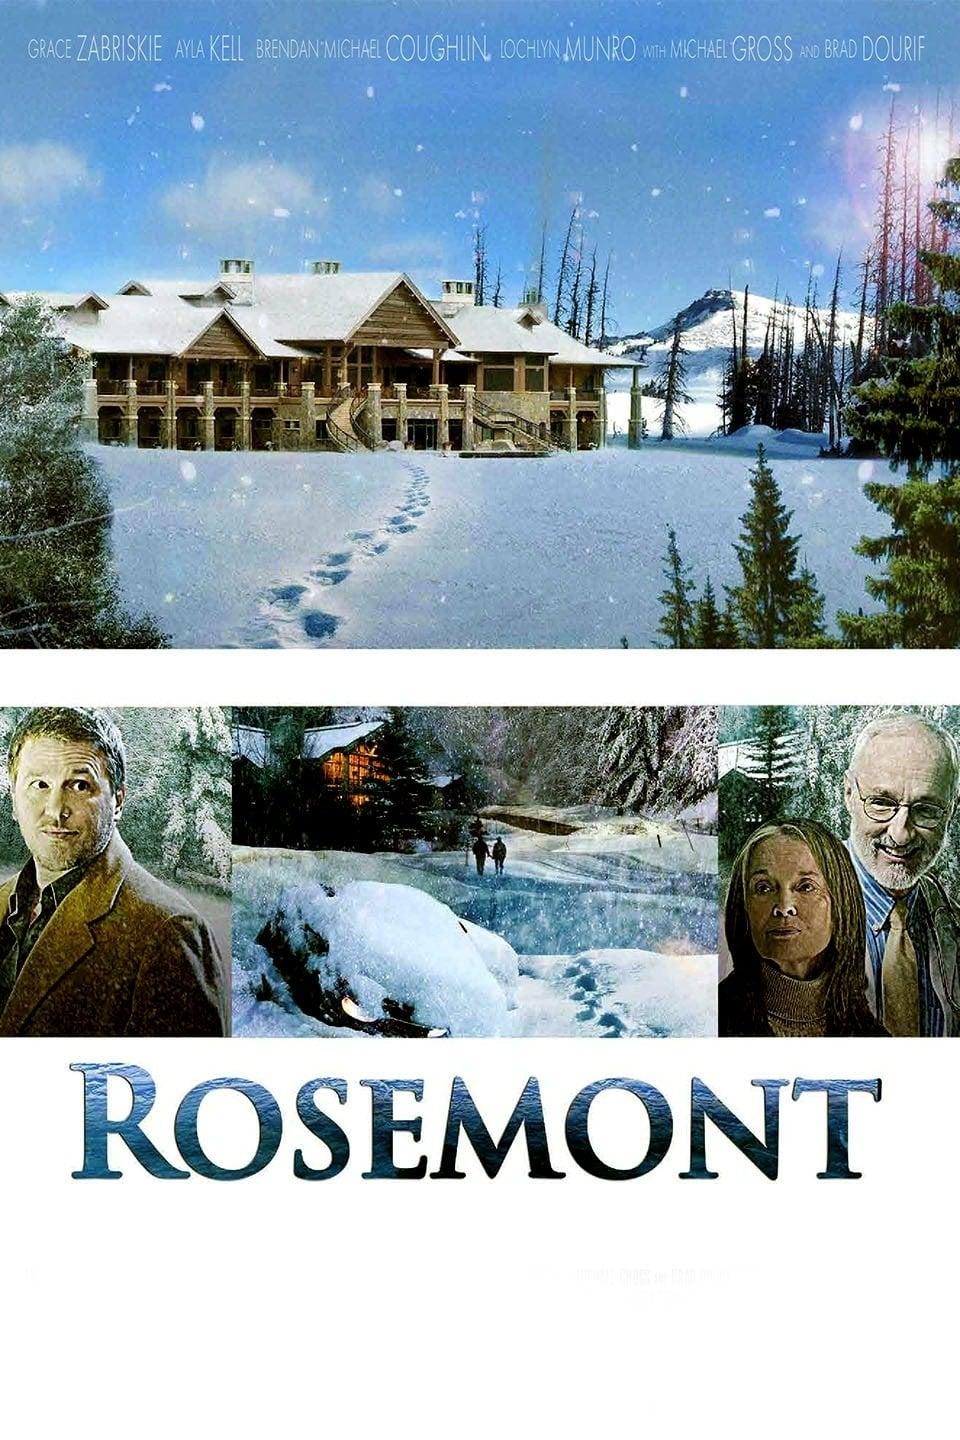 Rosemont poster